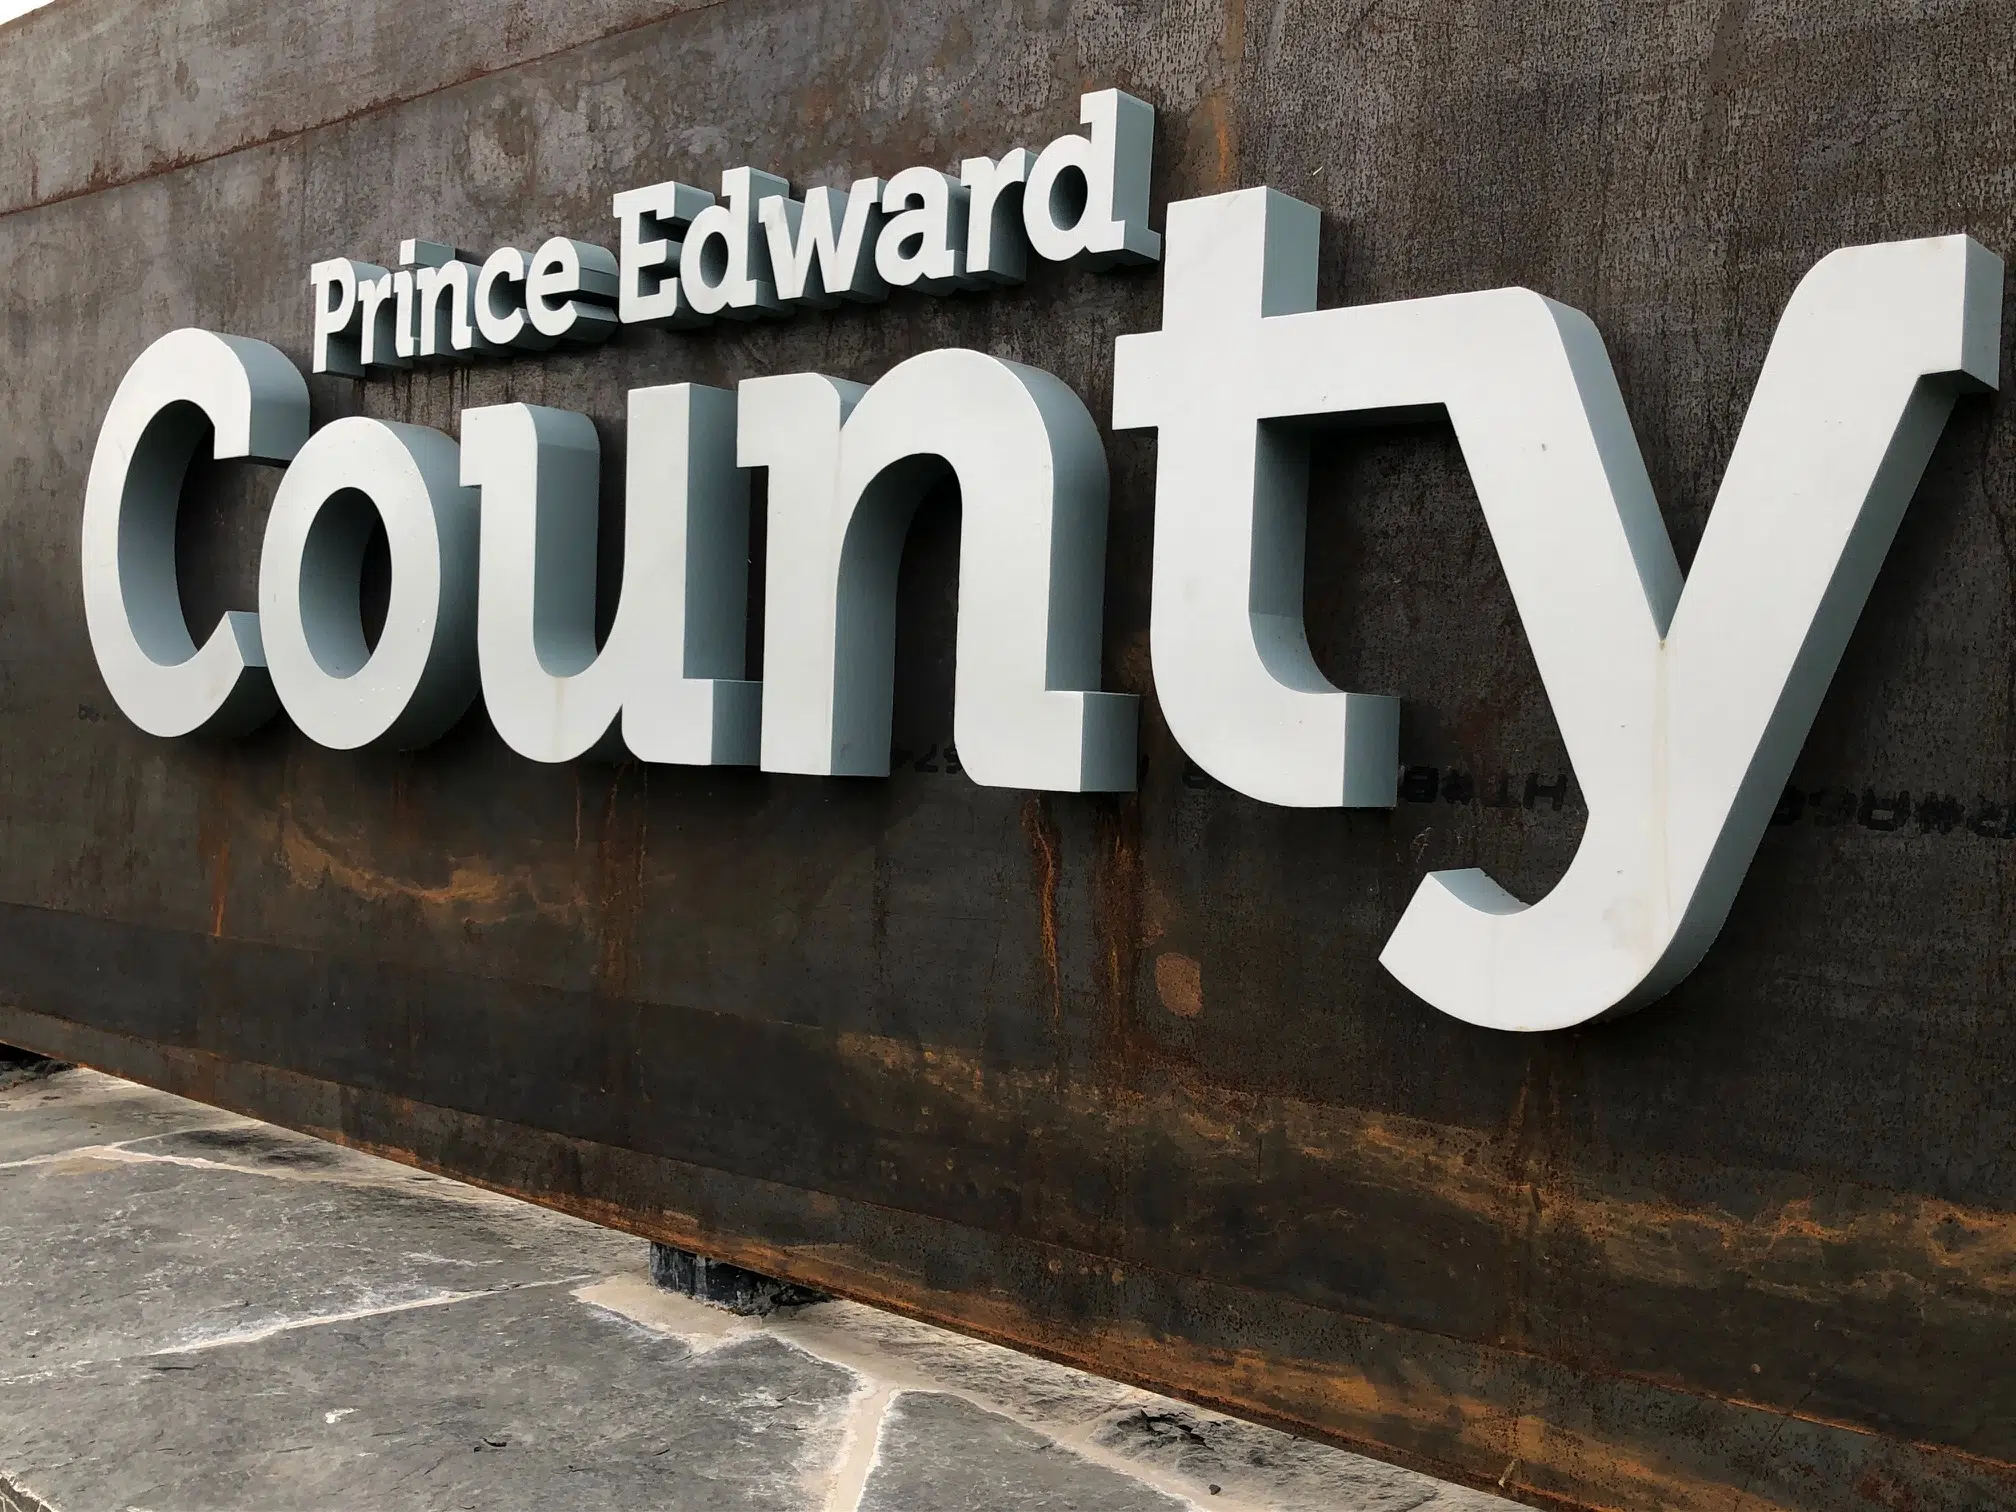 Prince Edward County briefs